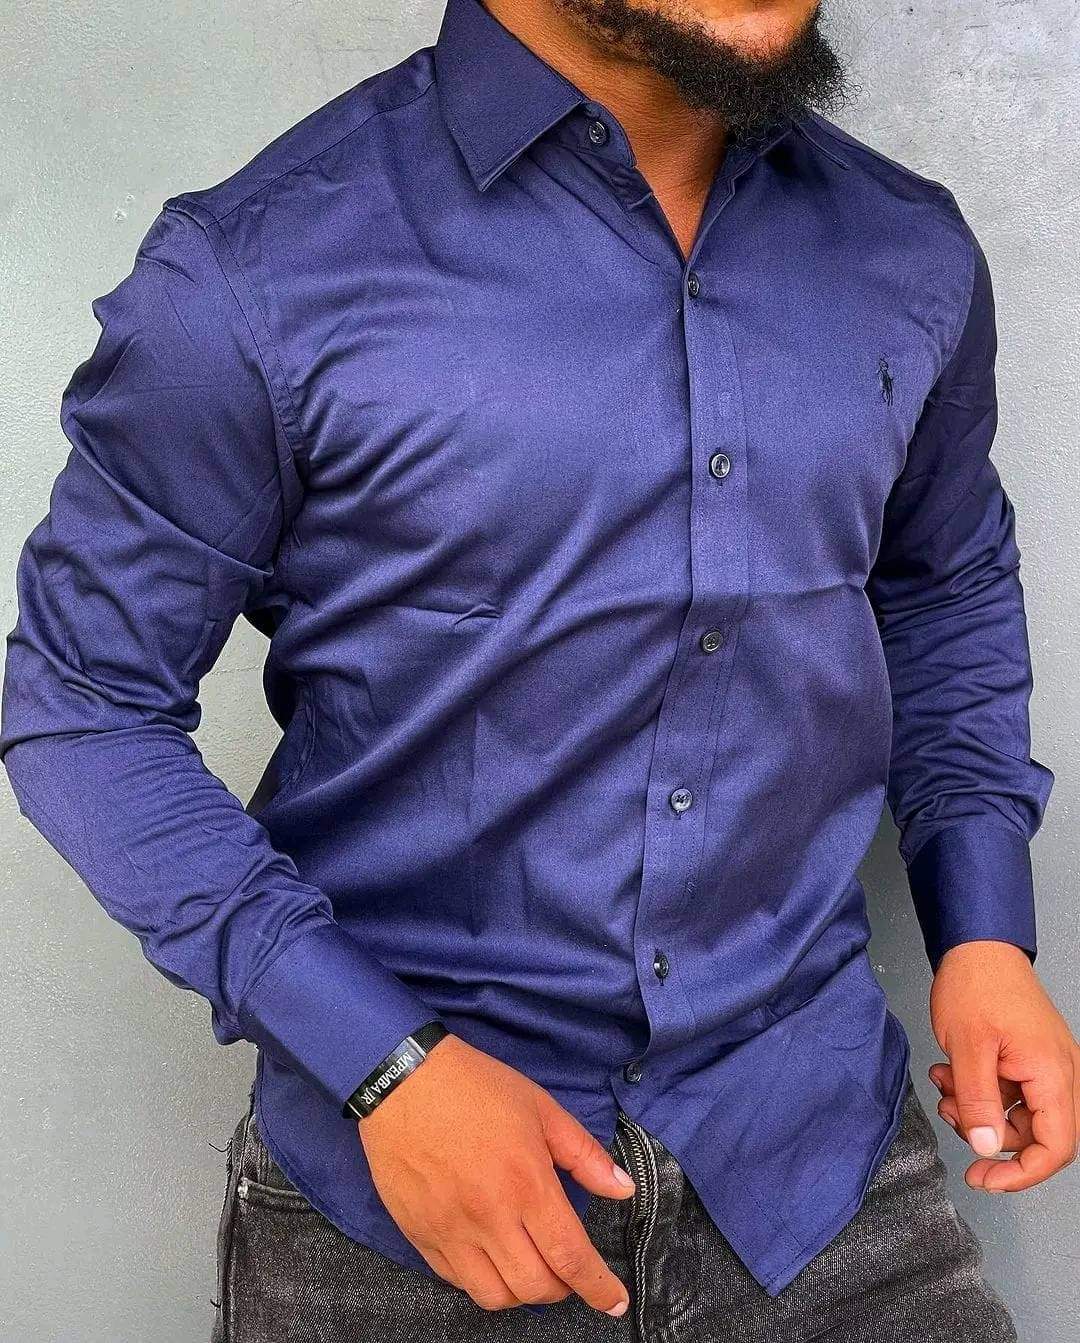 Long sleeve men office shirts 